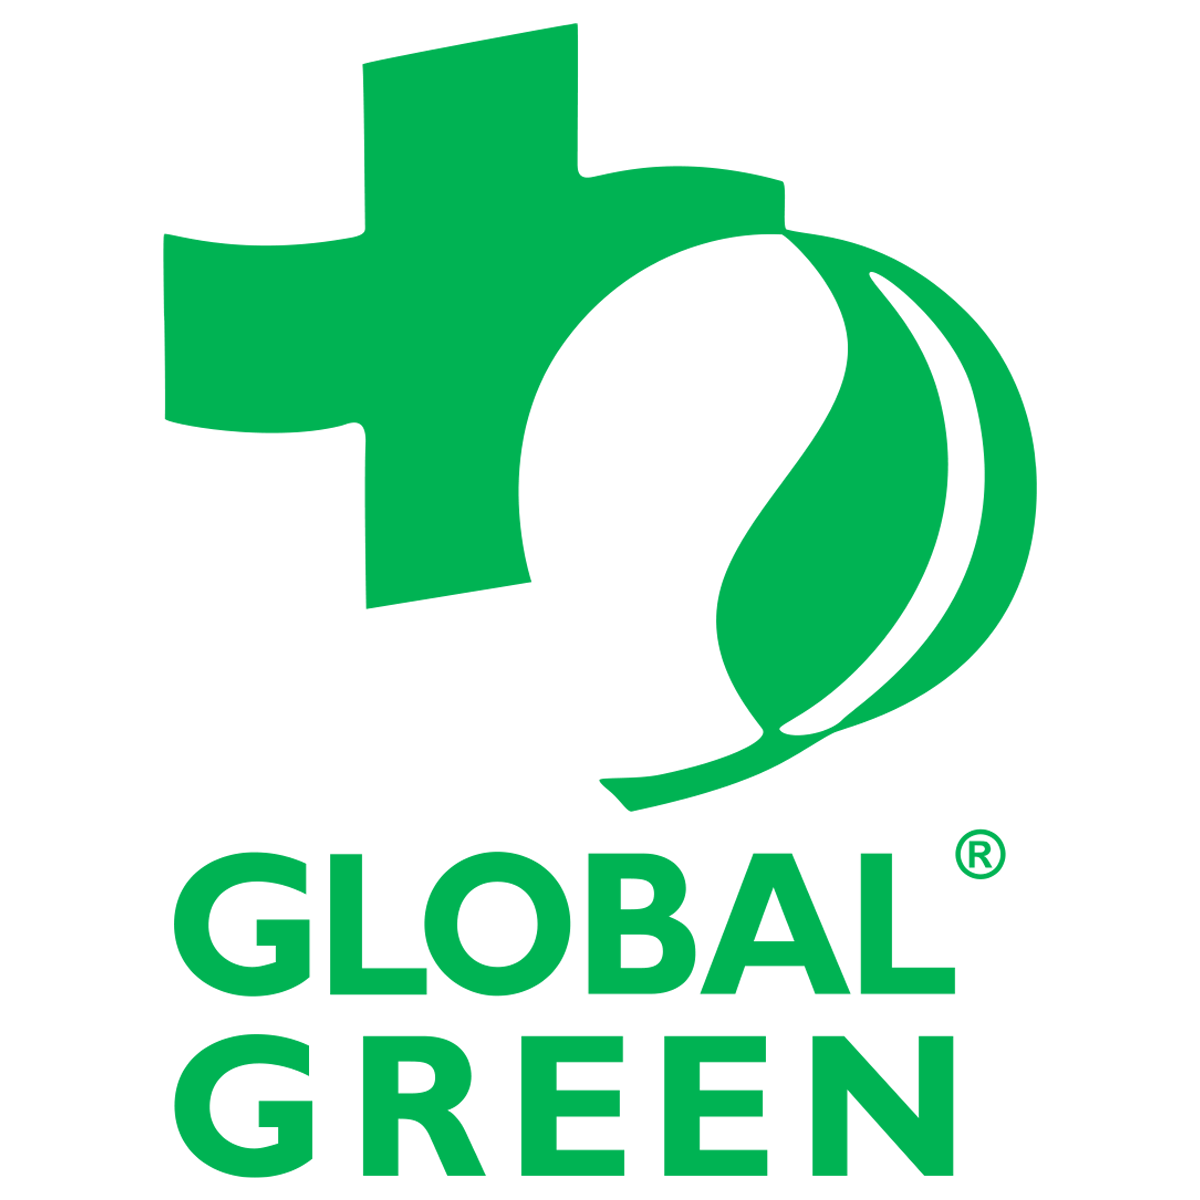 Global Green & the Global Citizen Festival